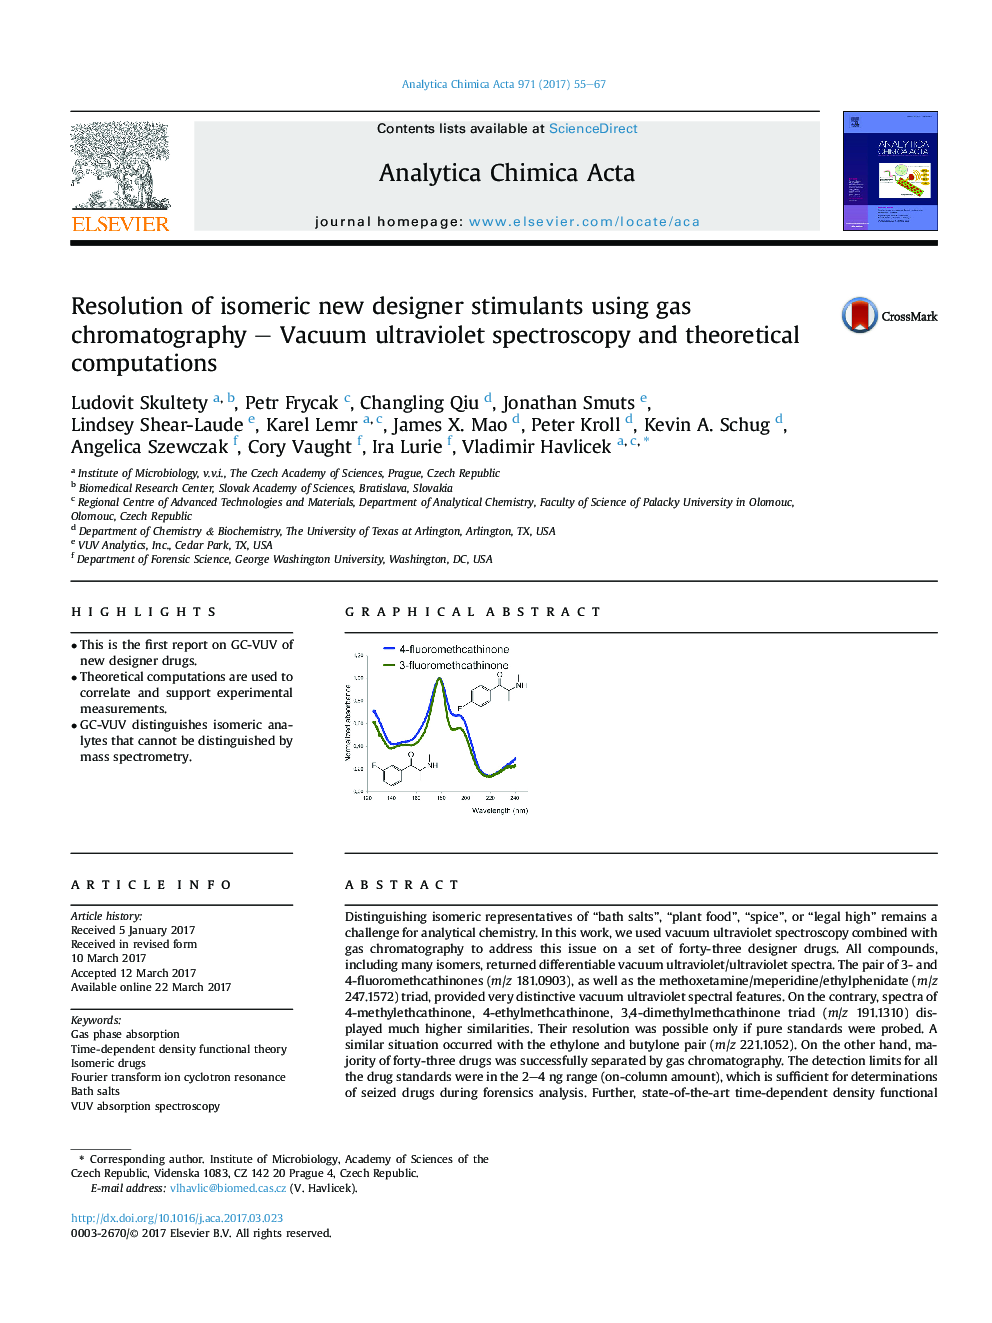 Resolution of isomeric new designer stimulants using gas chromatography - Vacuum ultraviolet spectroscopy and theoretical computations